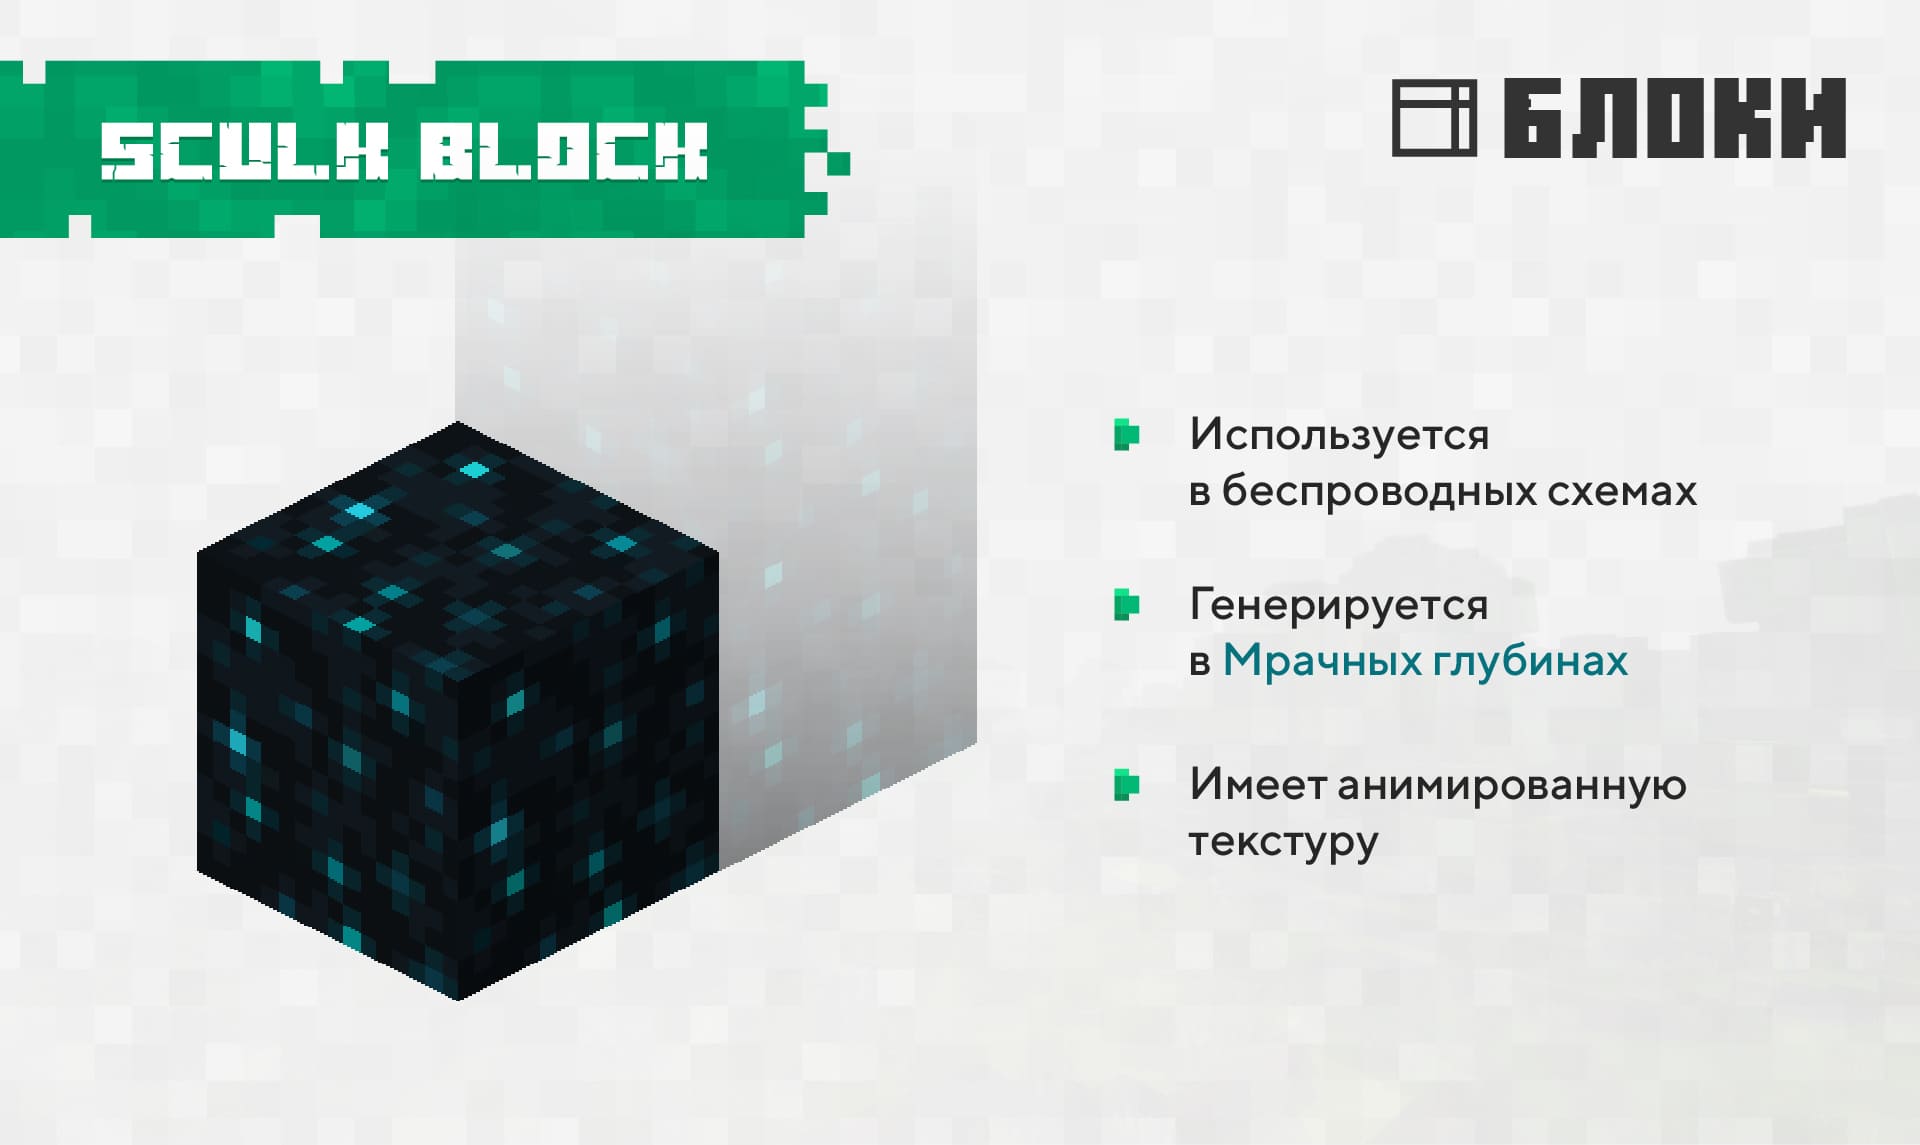 Skulk-block